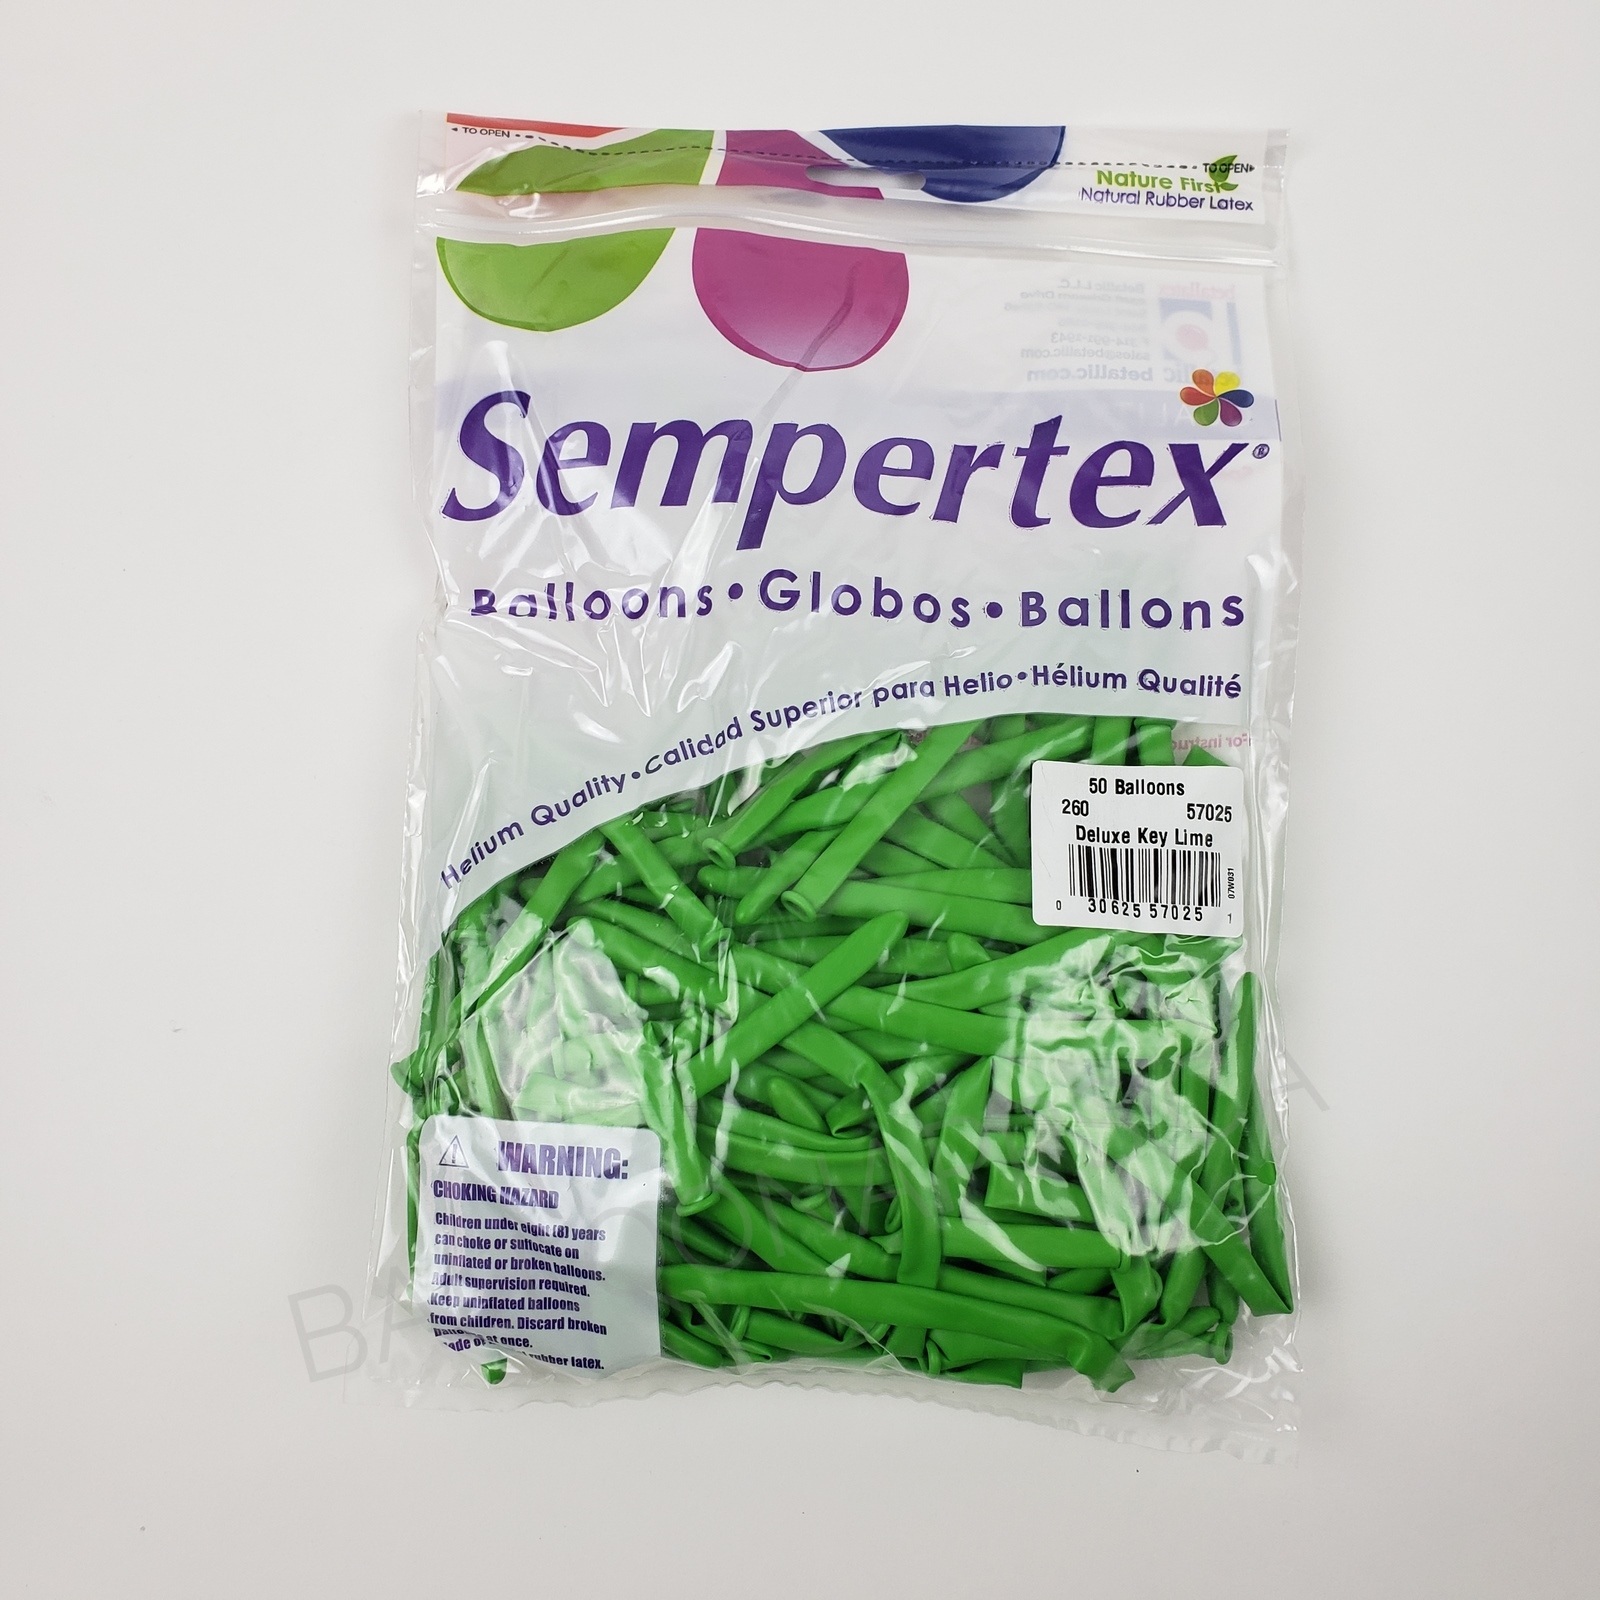 Sempertex 260 Key Lime